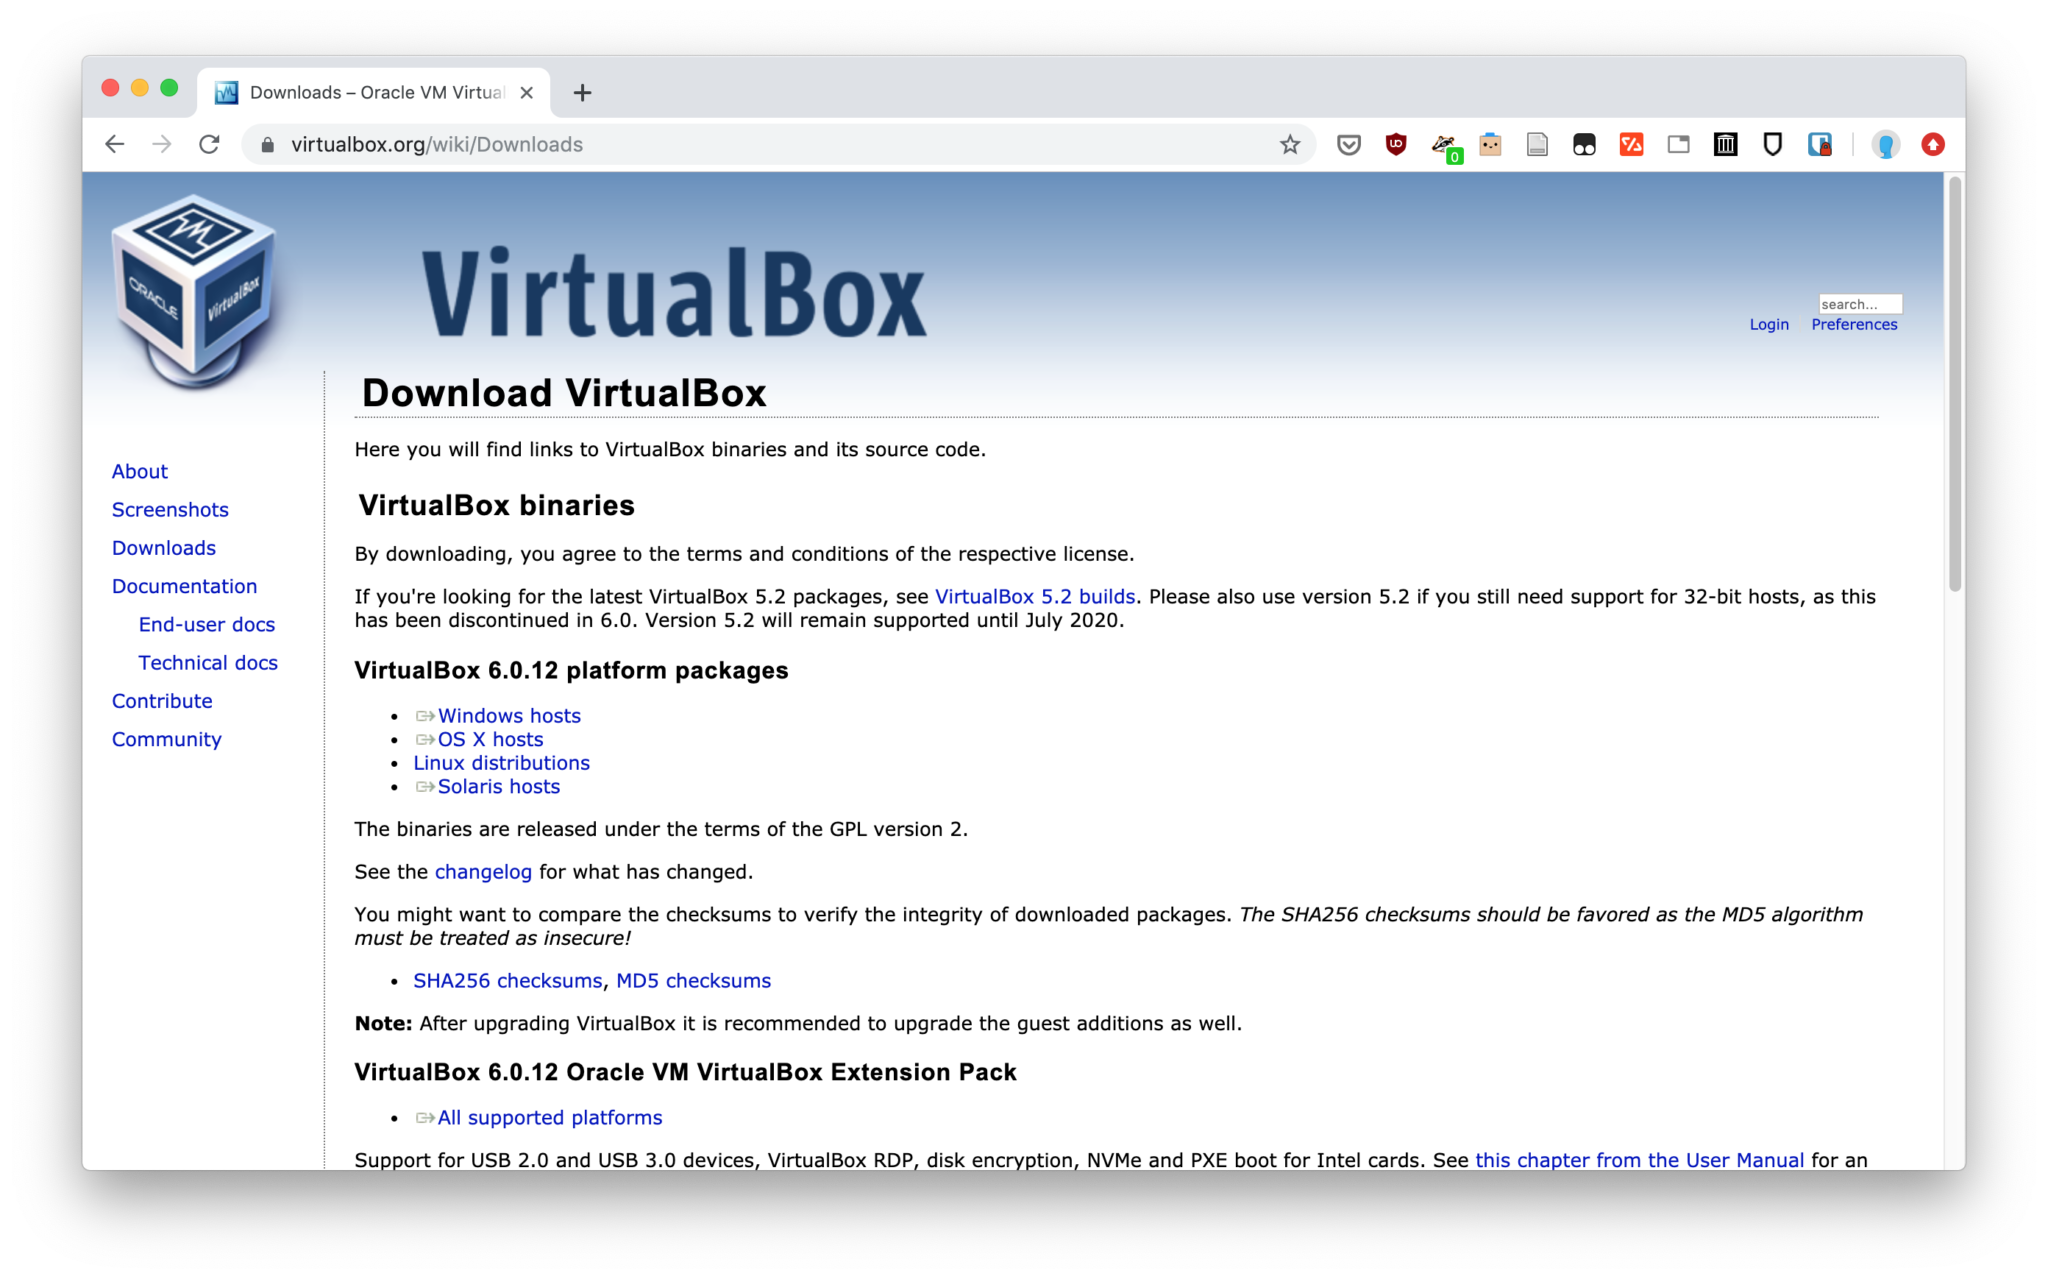 windows 10 iso for virtual box